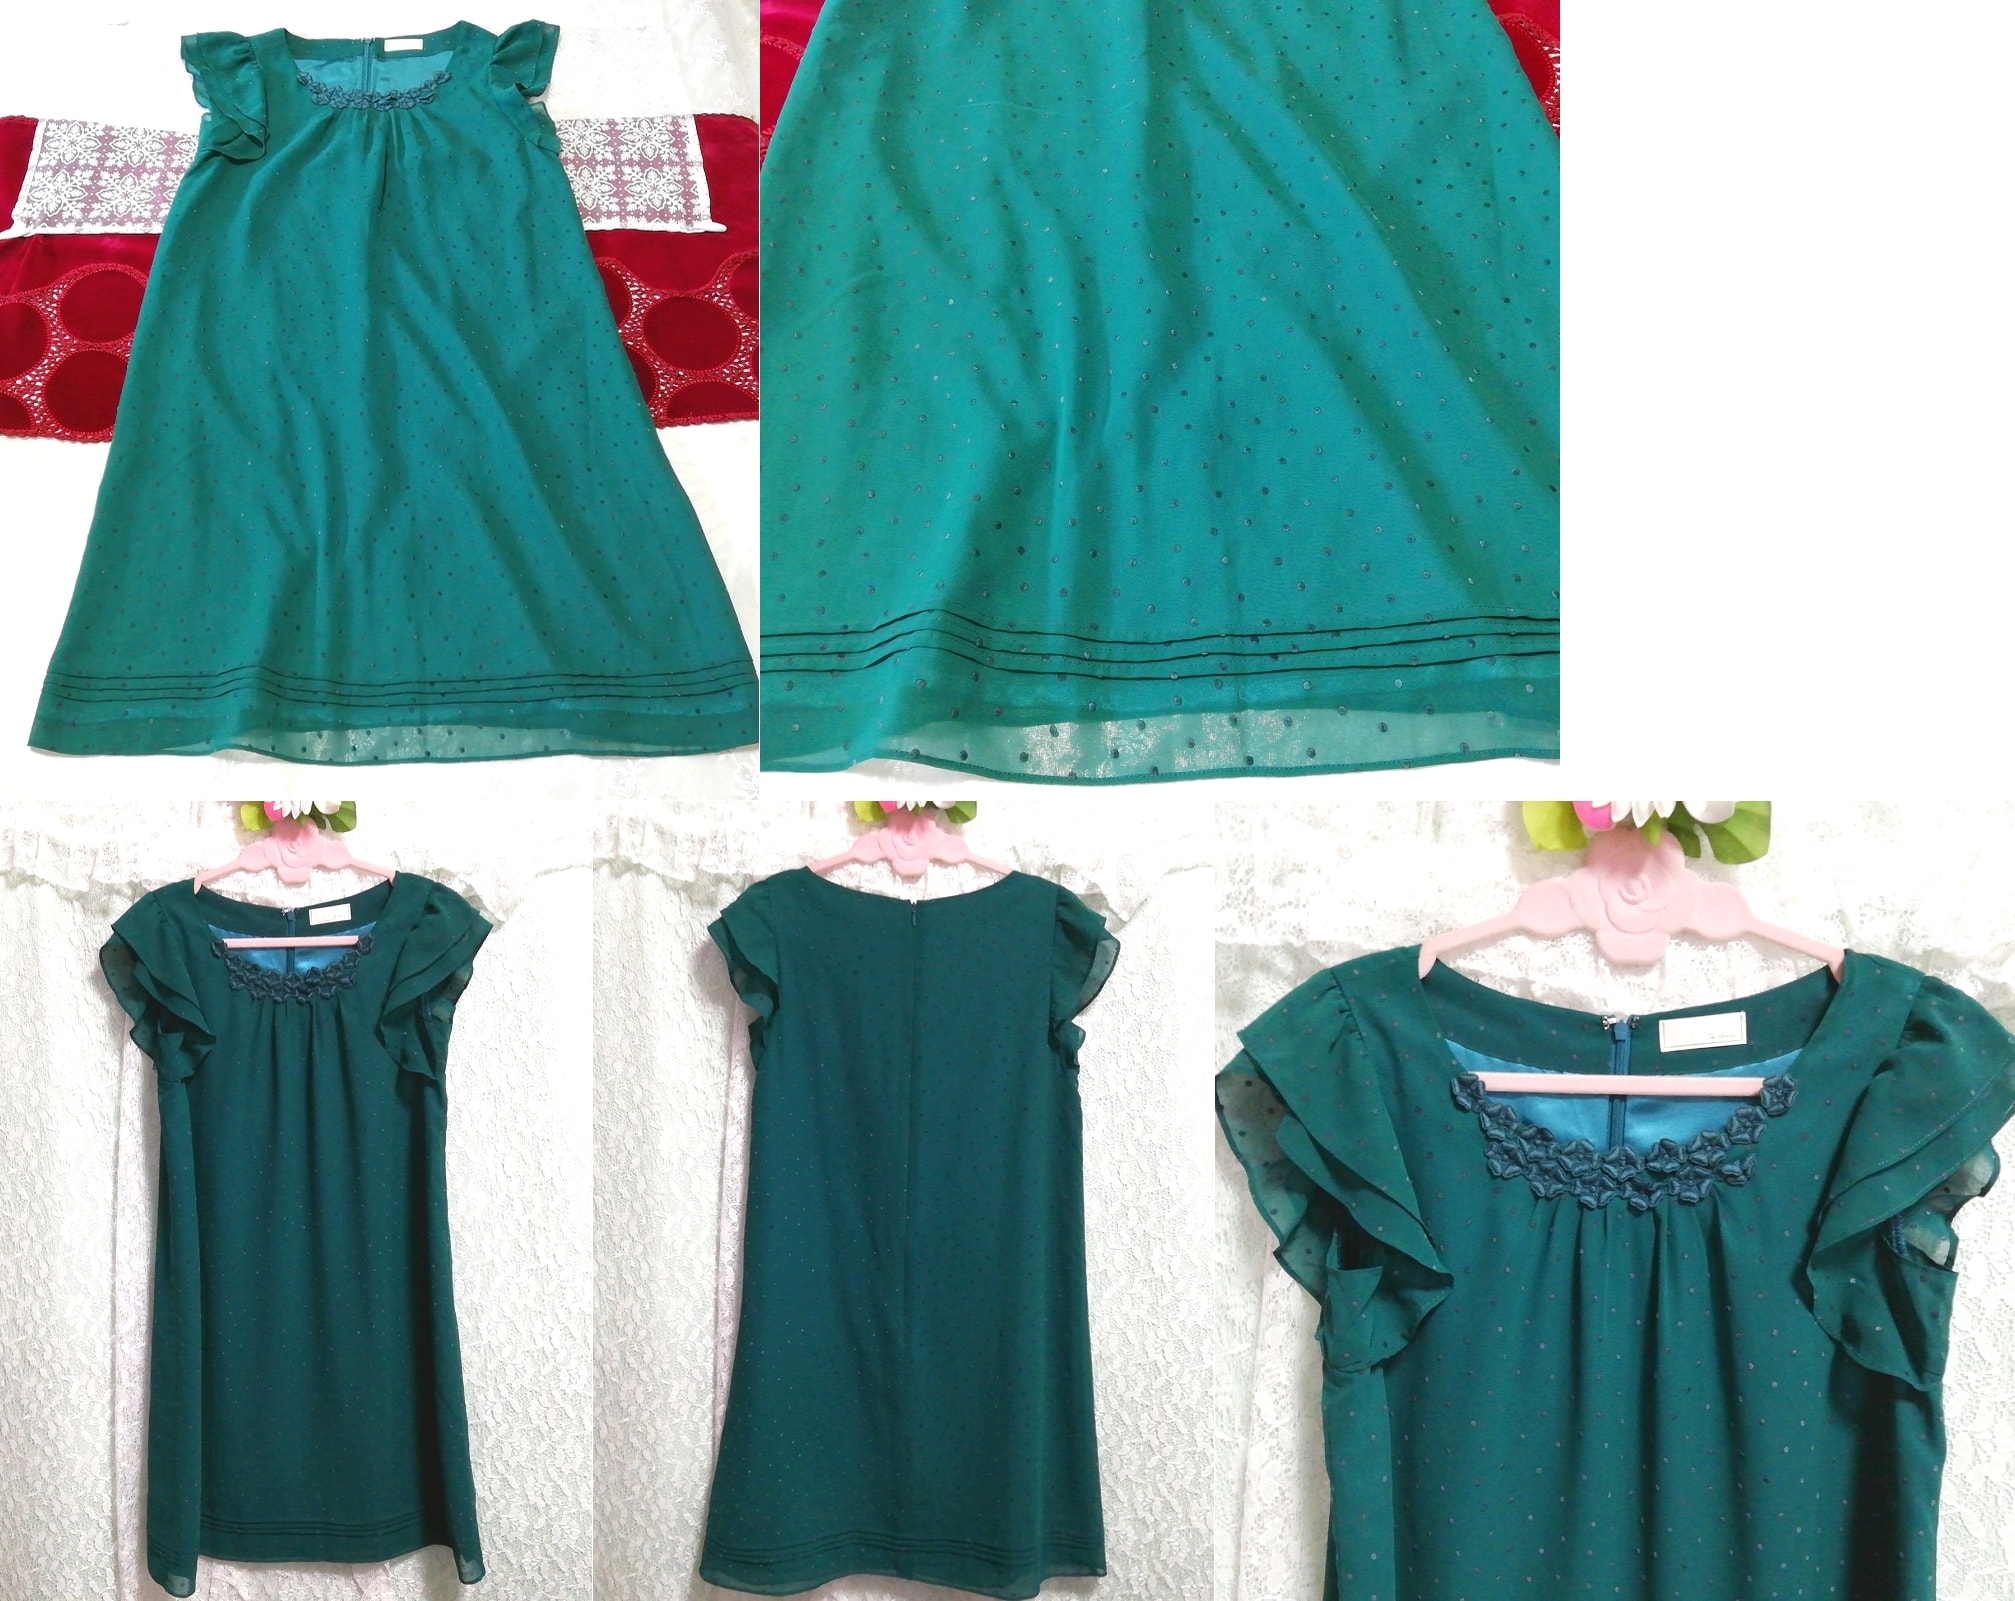 Vestido camisón negligee túnica sin mangas de gasa con volantes verdes, sayo, sin mangas, sin mangas, talla m